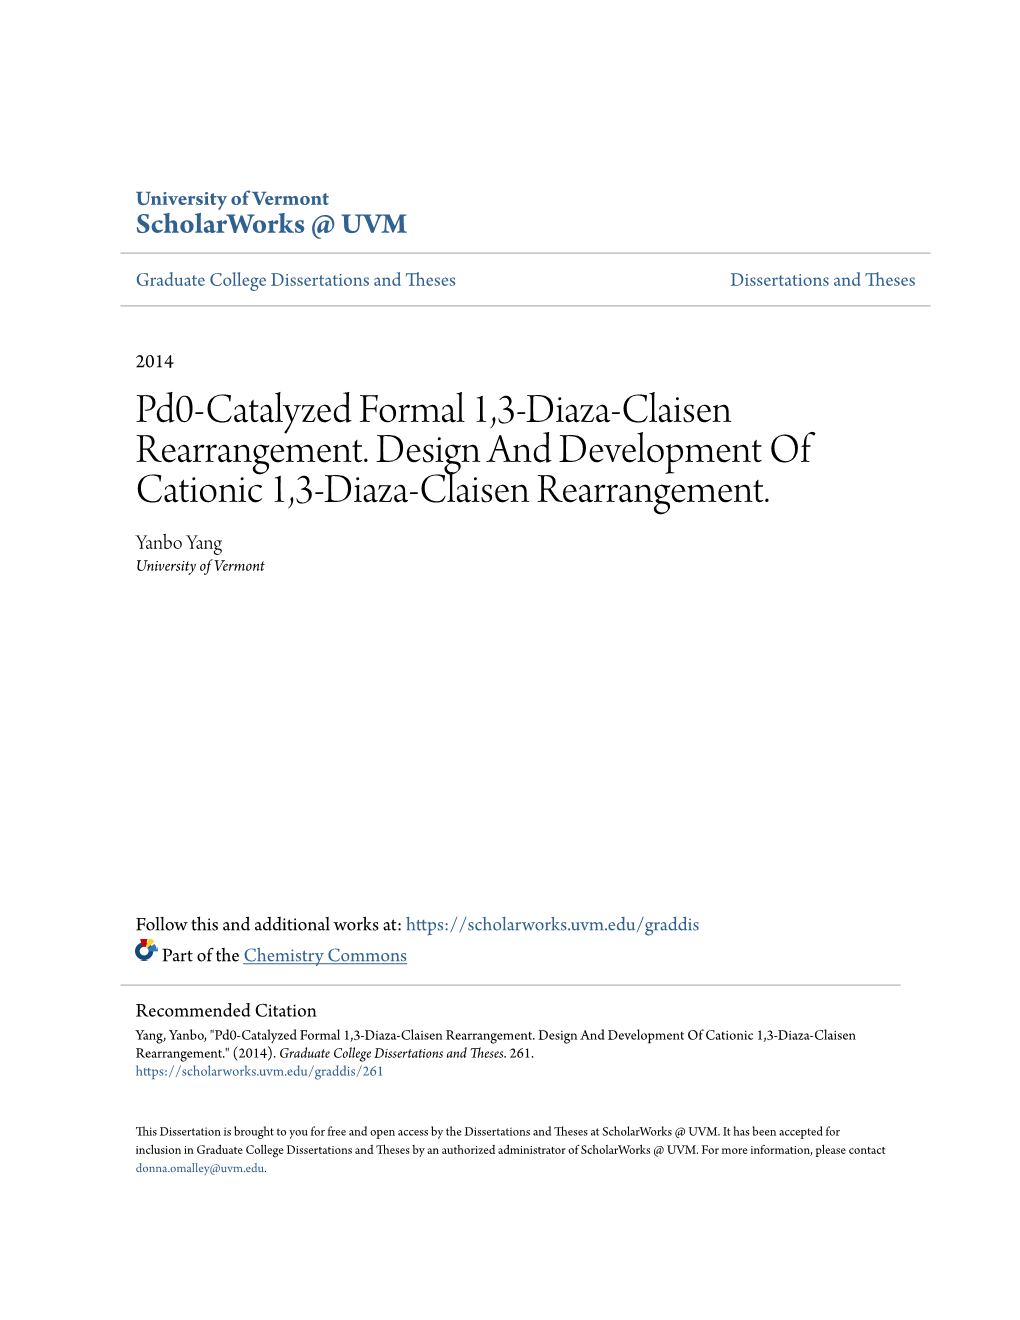 Pd0-Catalyzed Formal 1,3-Diaza-Claisen Rearrangement